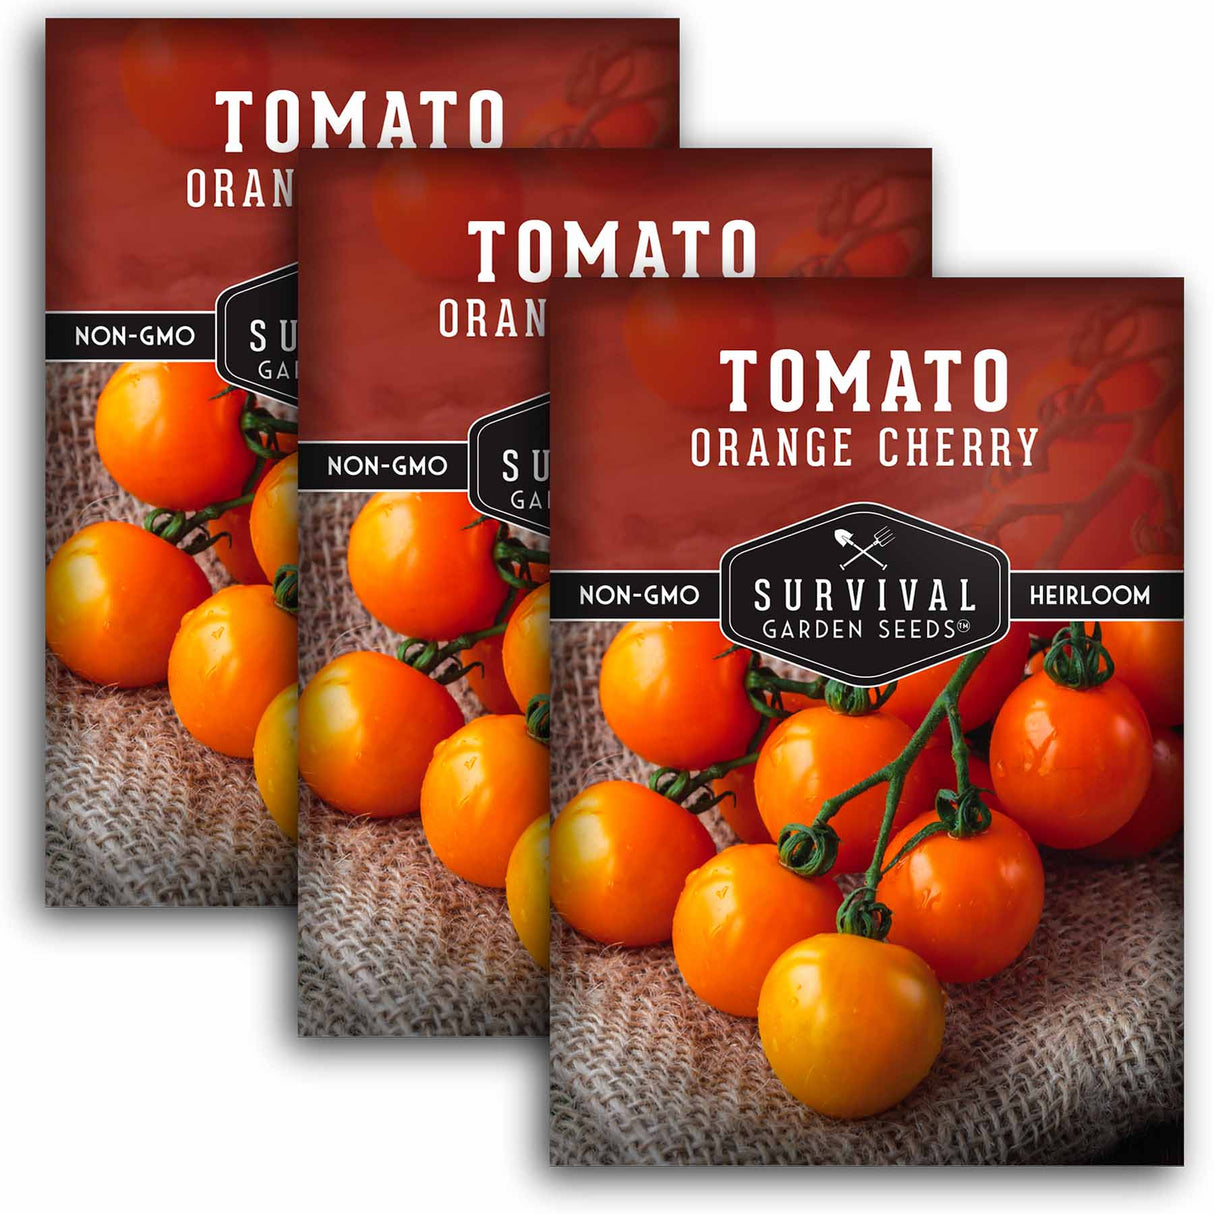 3 packets of Orange Cherry Tomato seeds